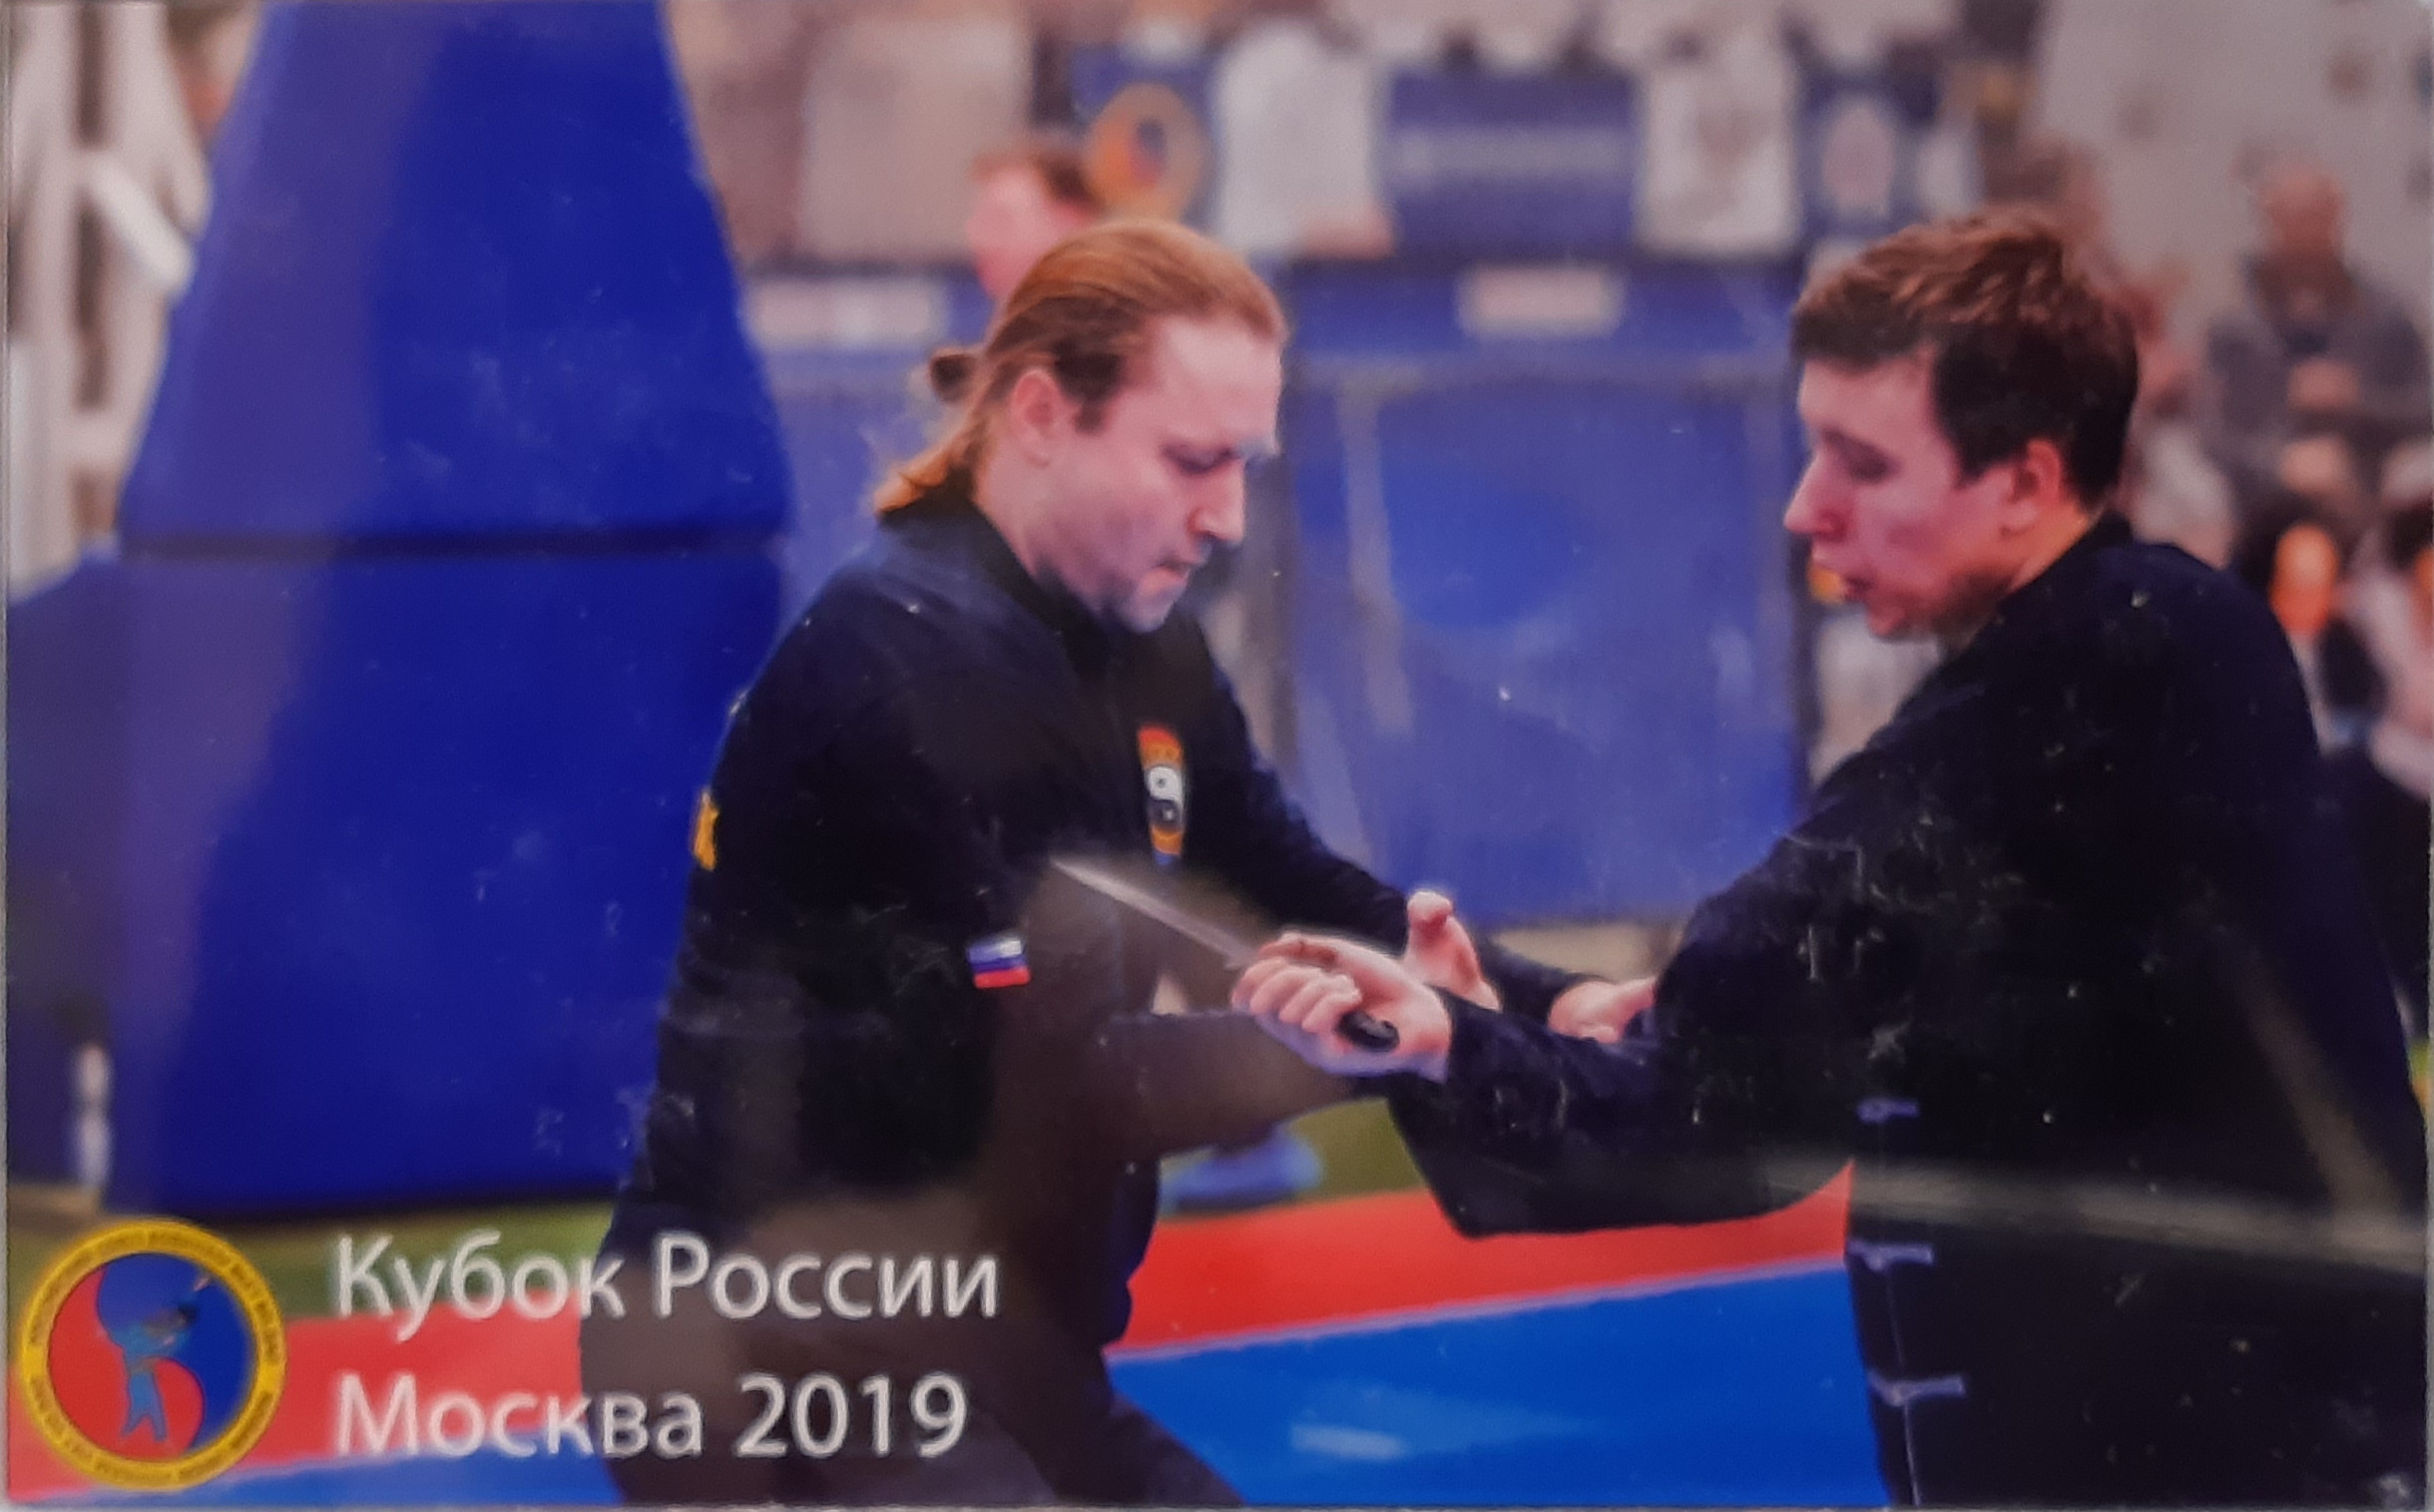 Кубок России по ВБЕ Вьет-во-дао 2019